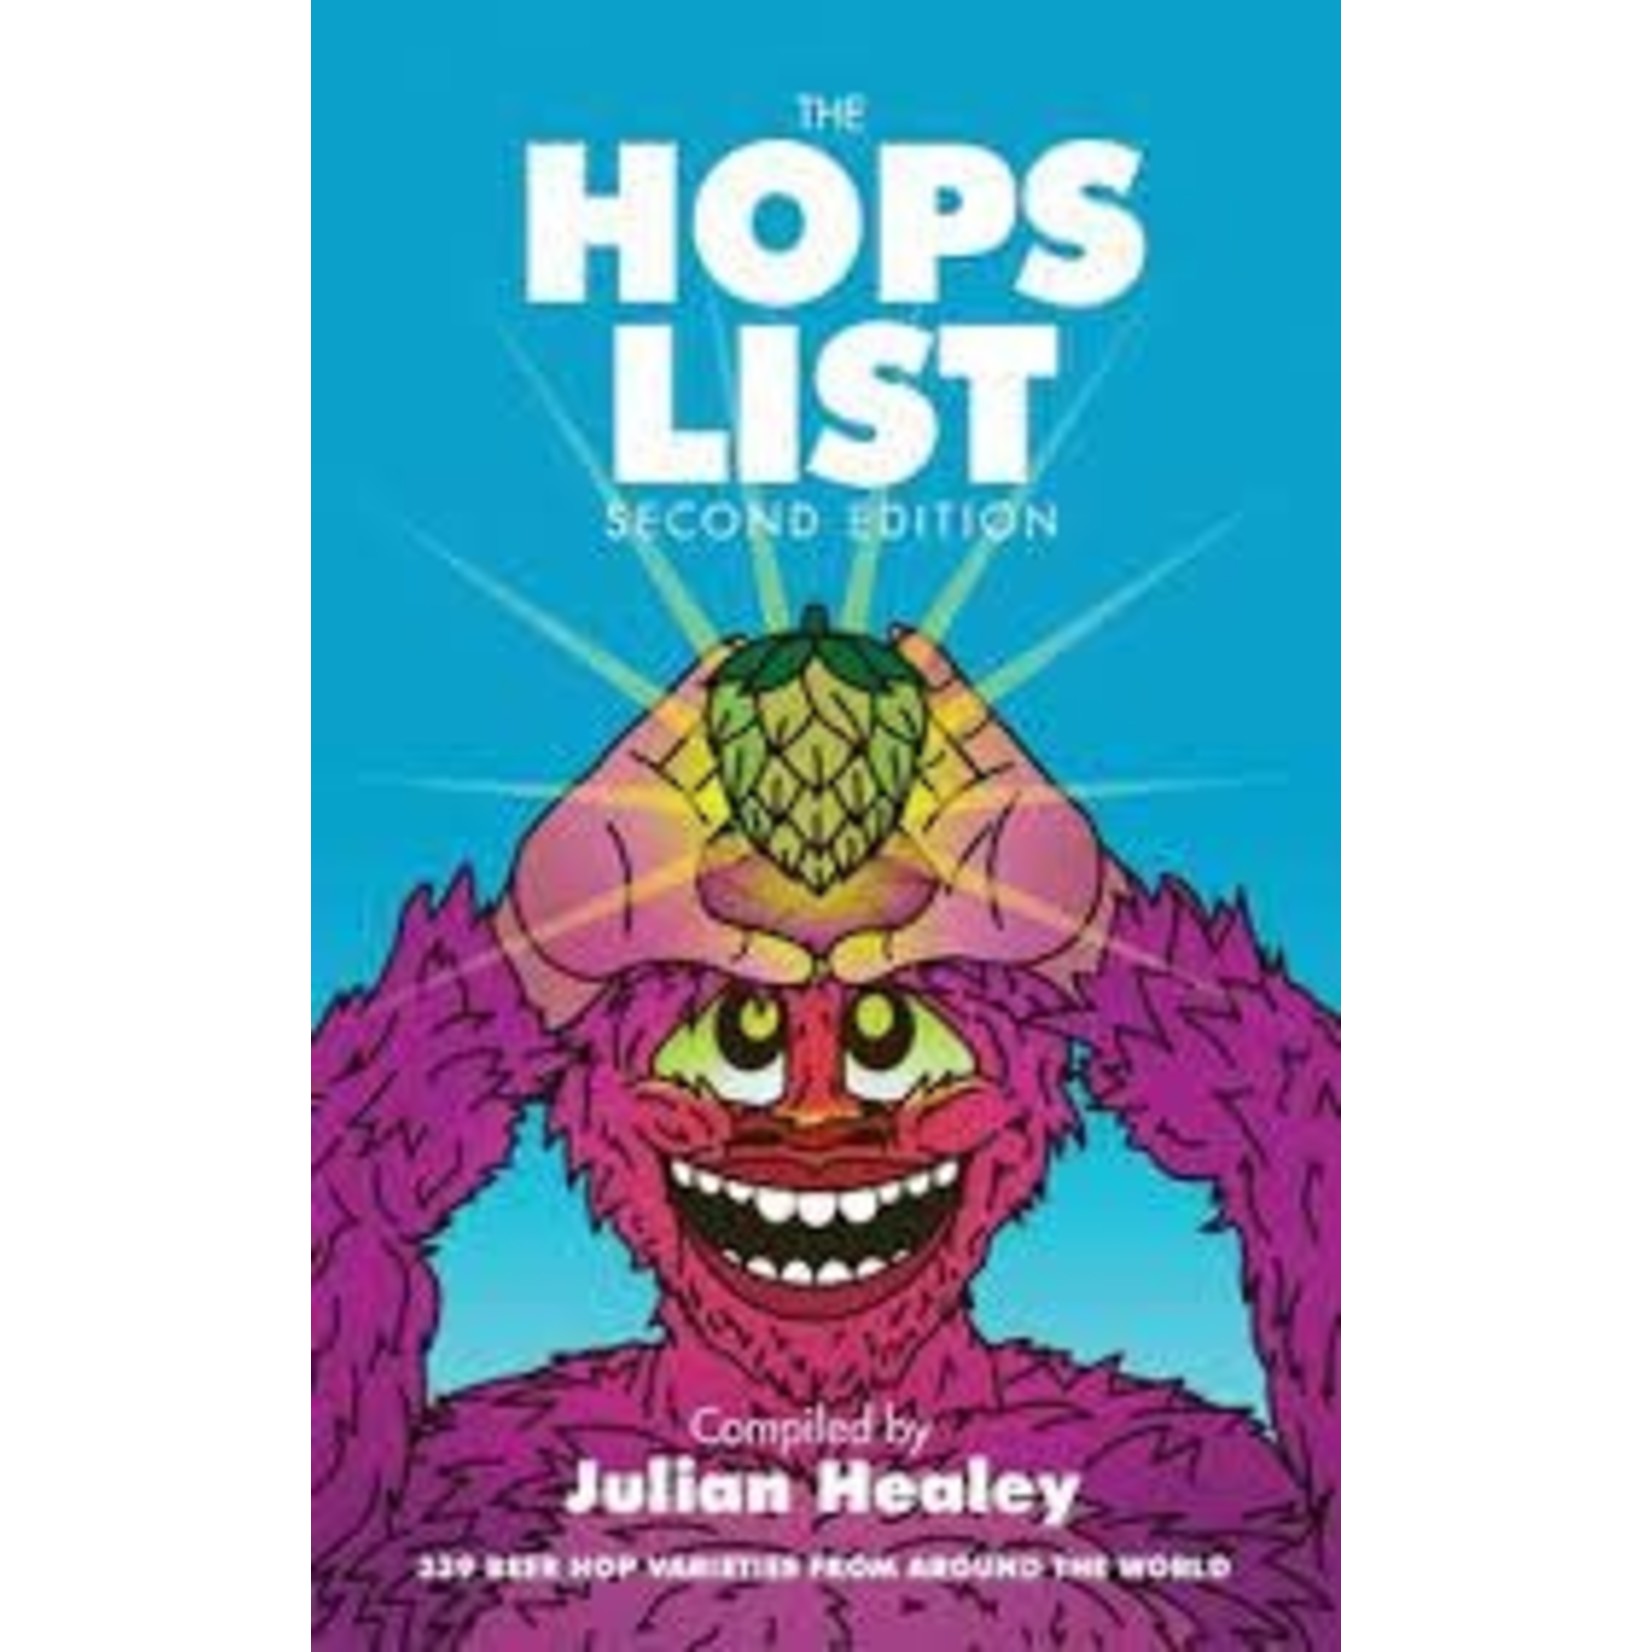 The Hops List